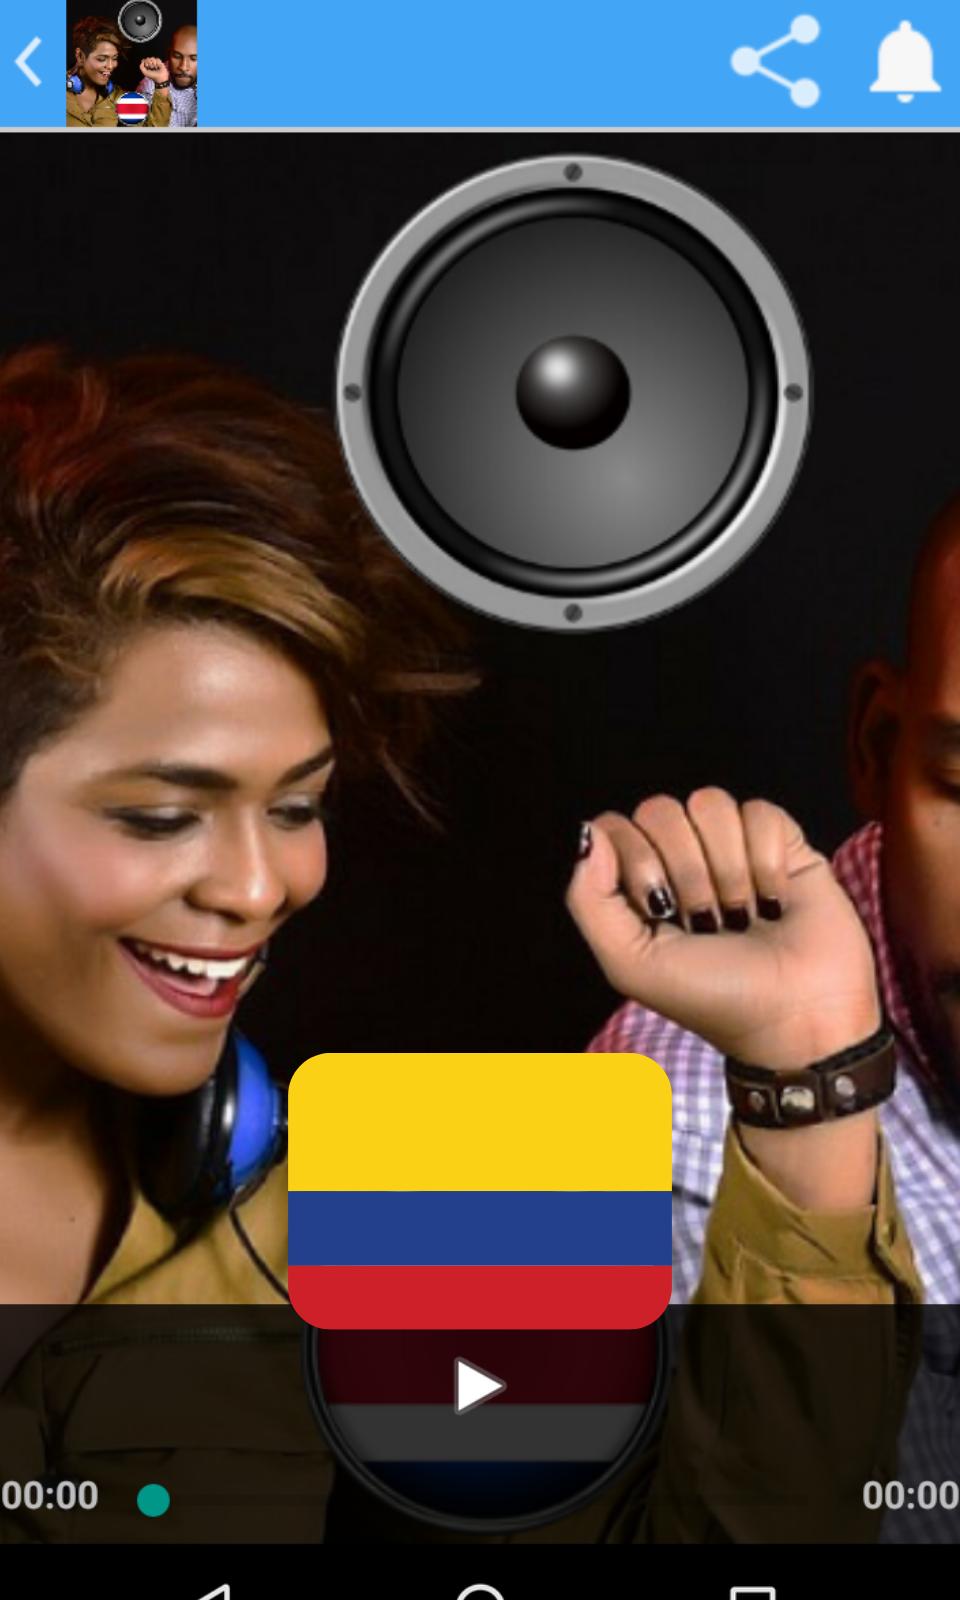 Emisora Estrella Estereo Medellin online Android के लिए APK डाउनलोड करें